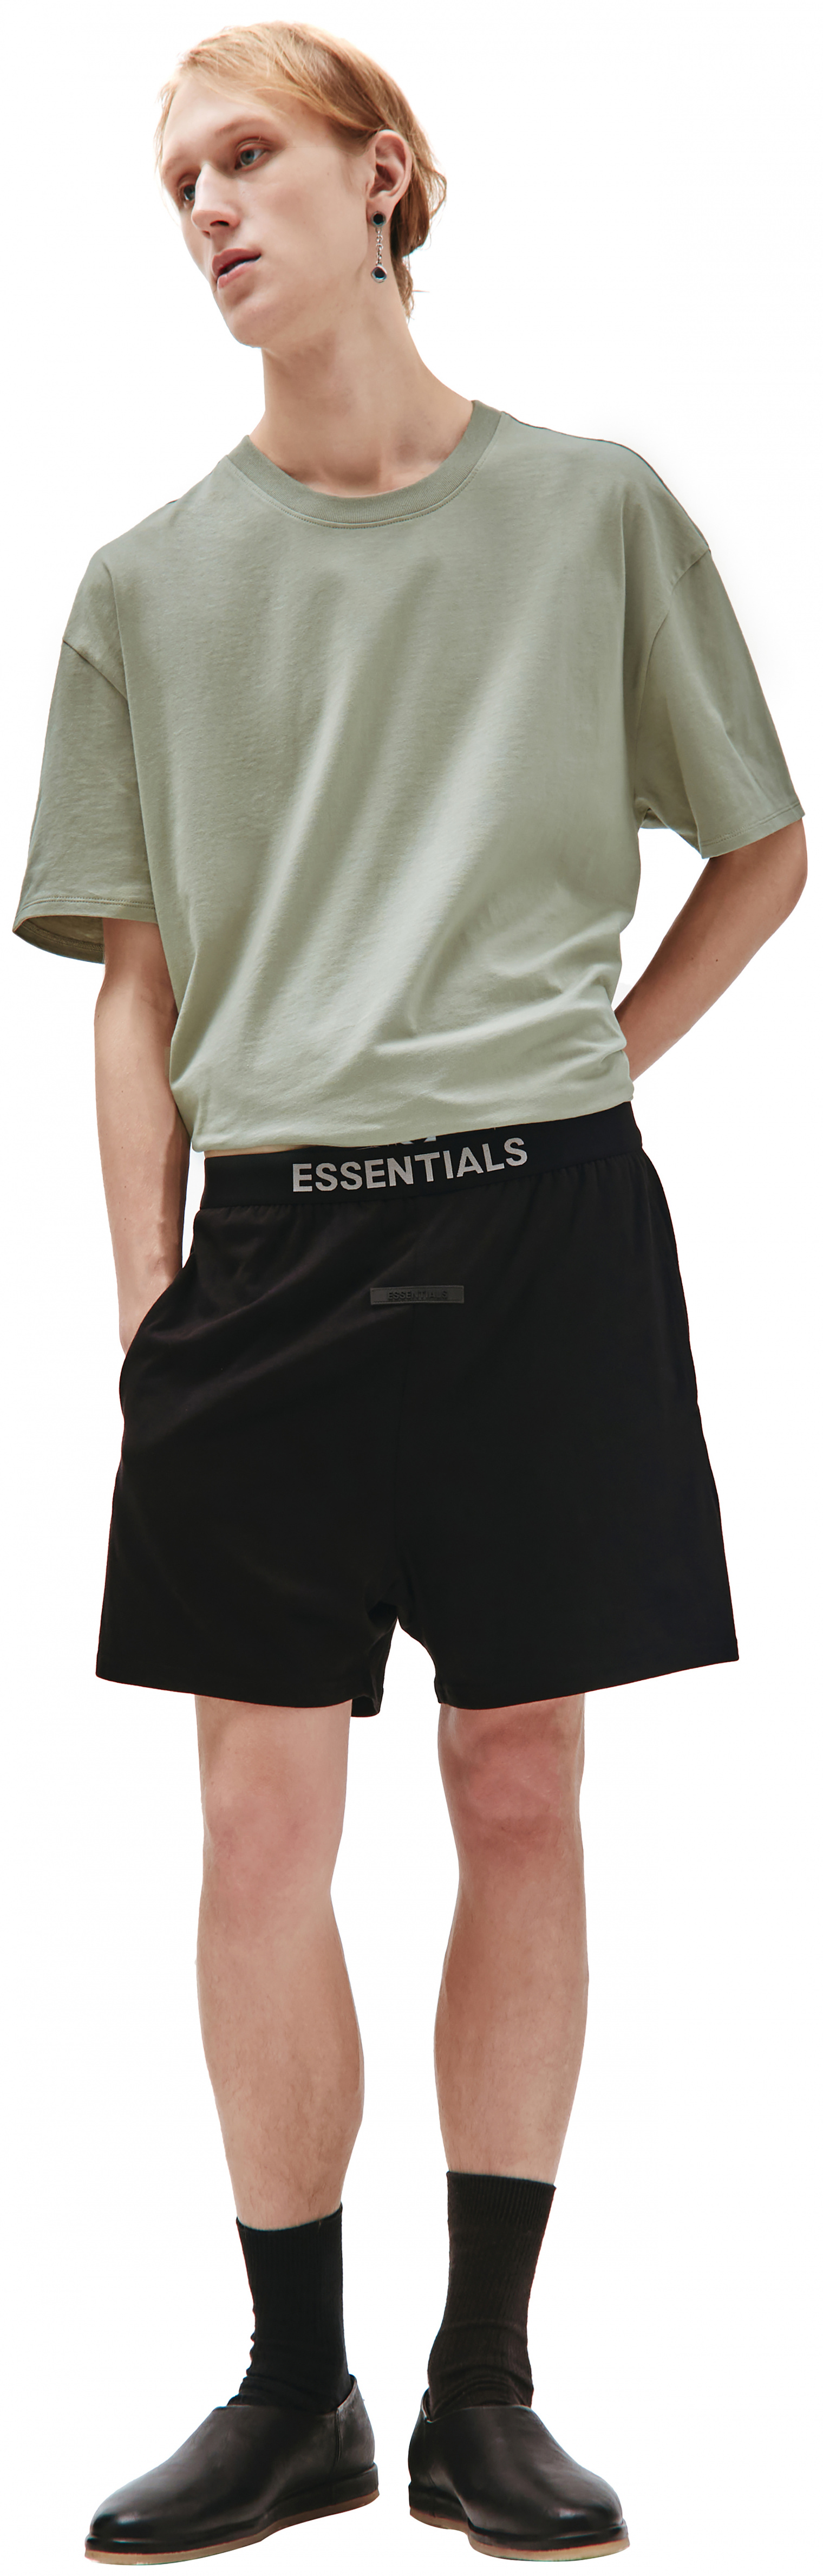 Fear of God Essentials Black logo shorts with elastic